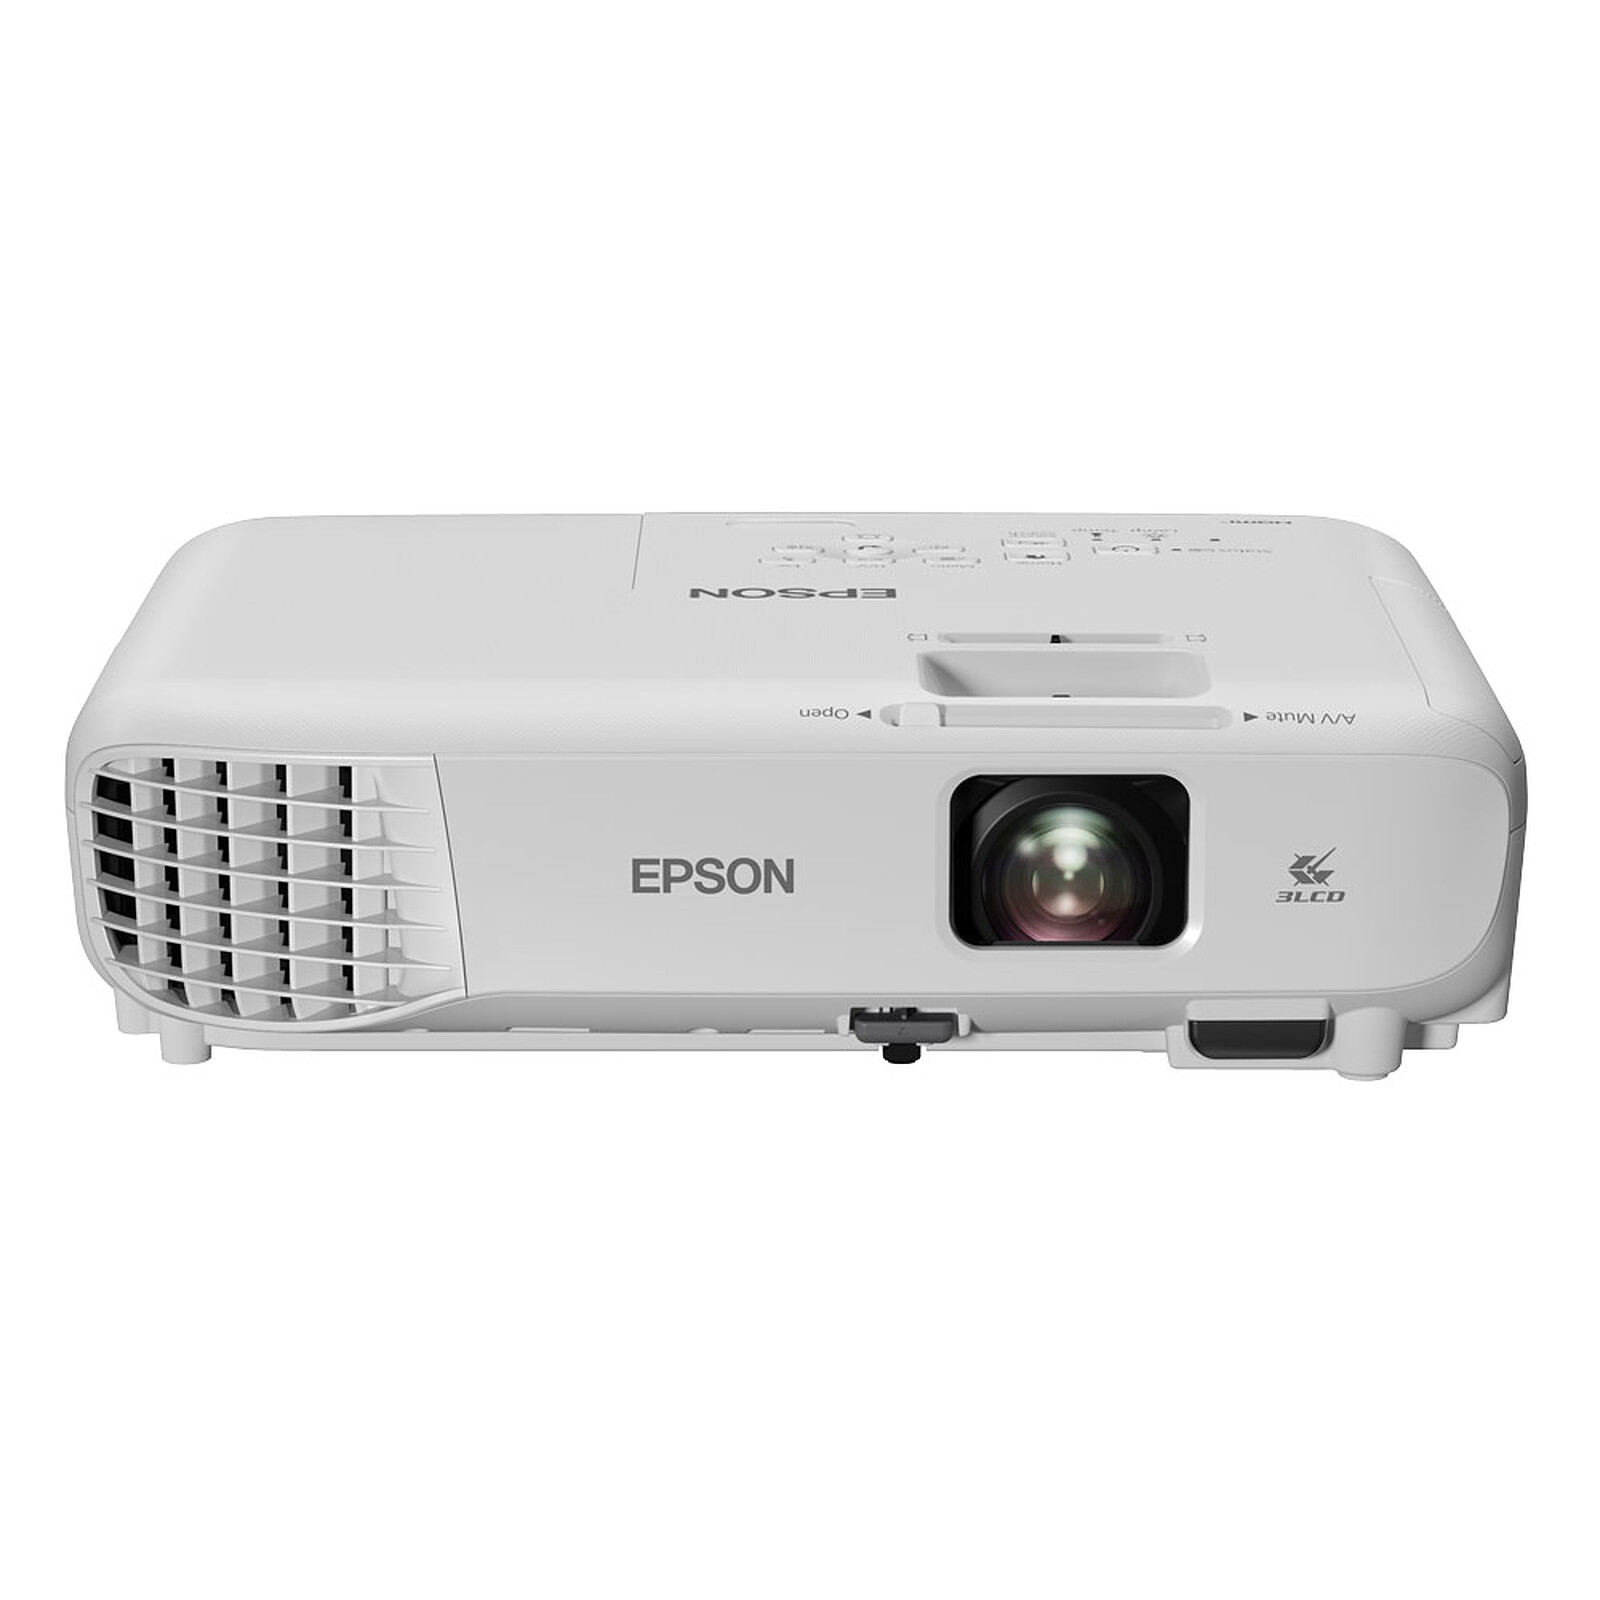 Impresora Epson L555 - Sitec